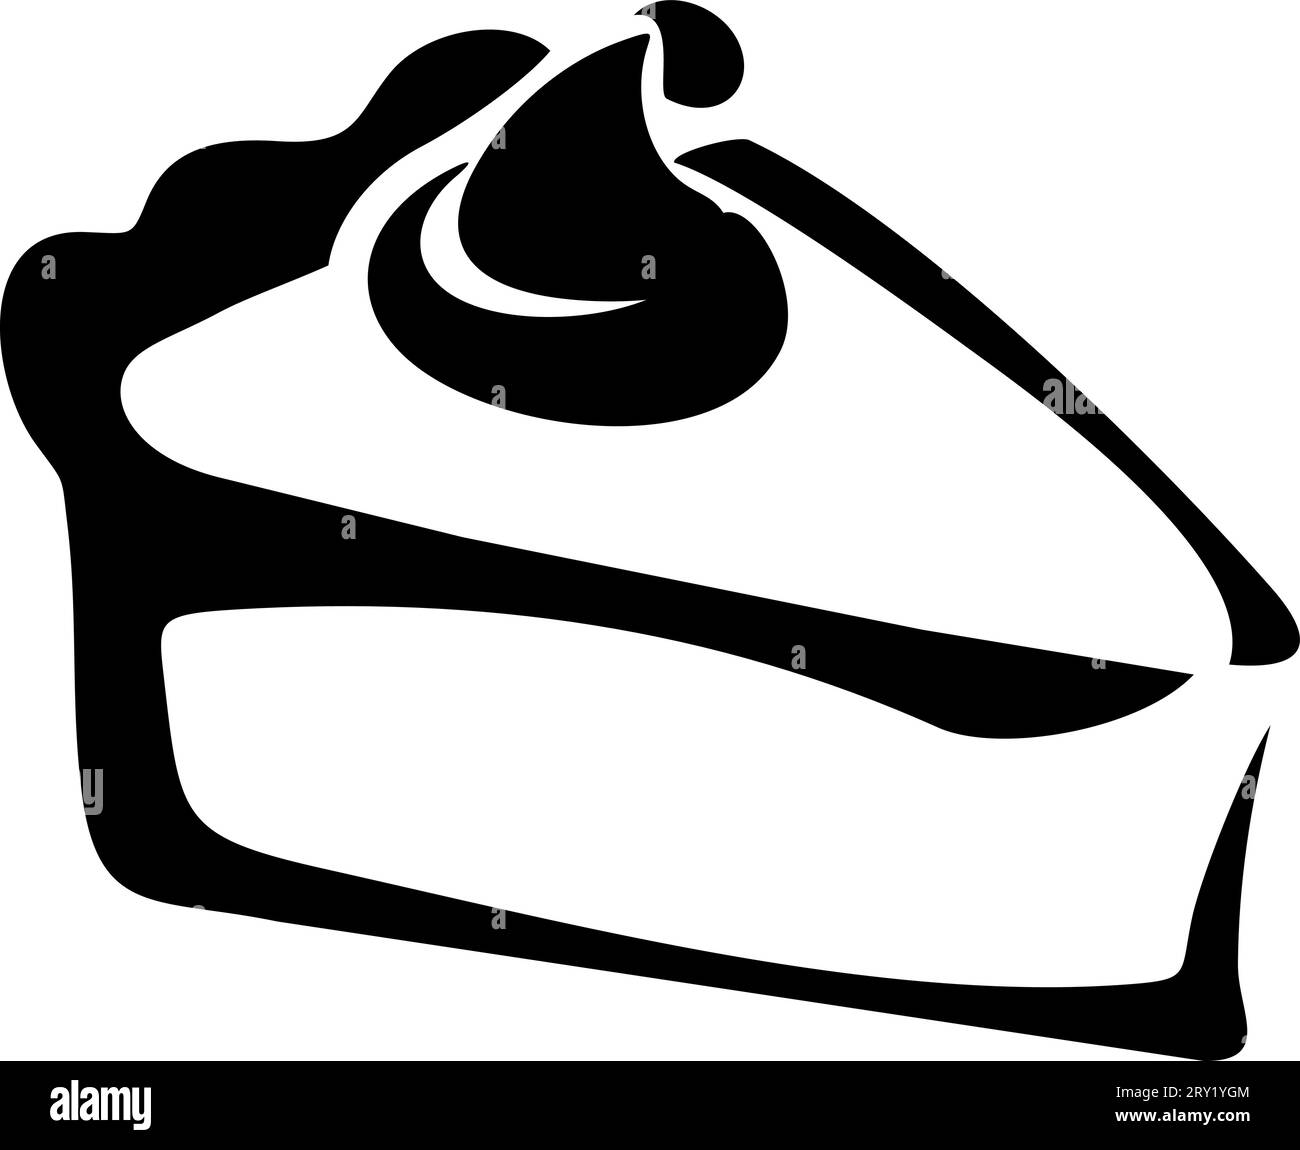 Fetta di torta di zucca. Silhouette nera di una fetta di zucca isolata su sfondo bianco. Illustrazione vettoriale Illustrazione Vettoriale